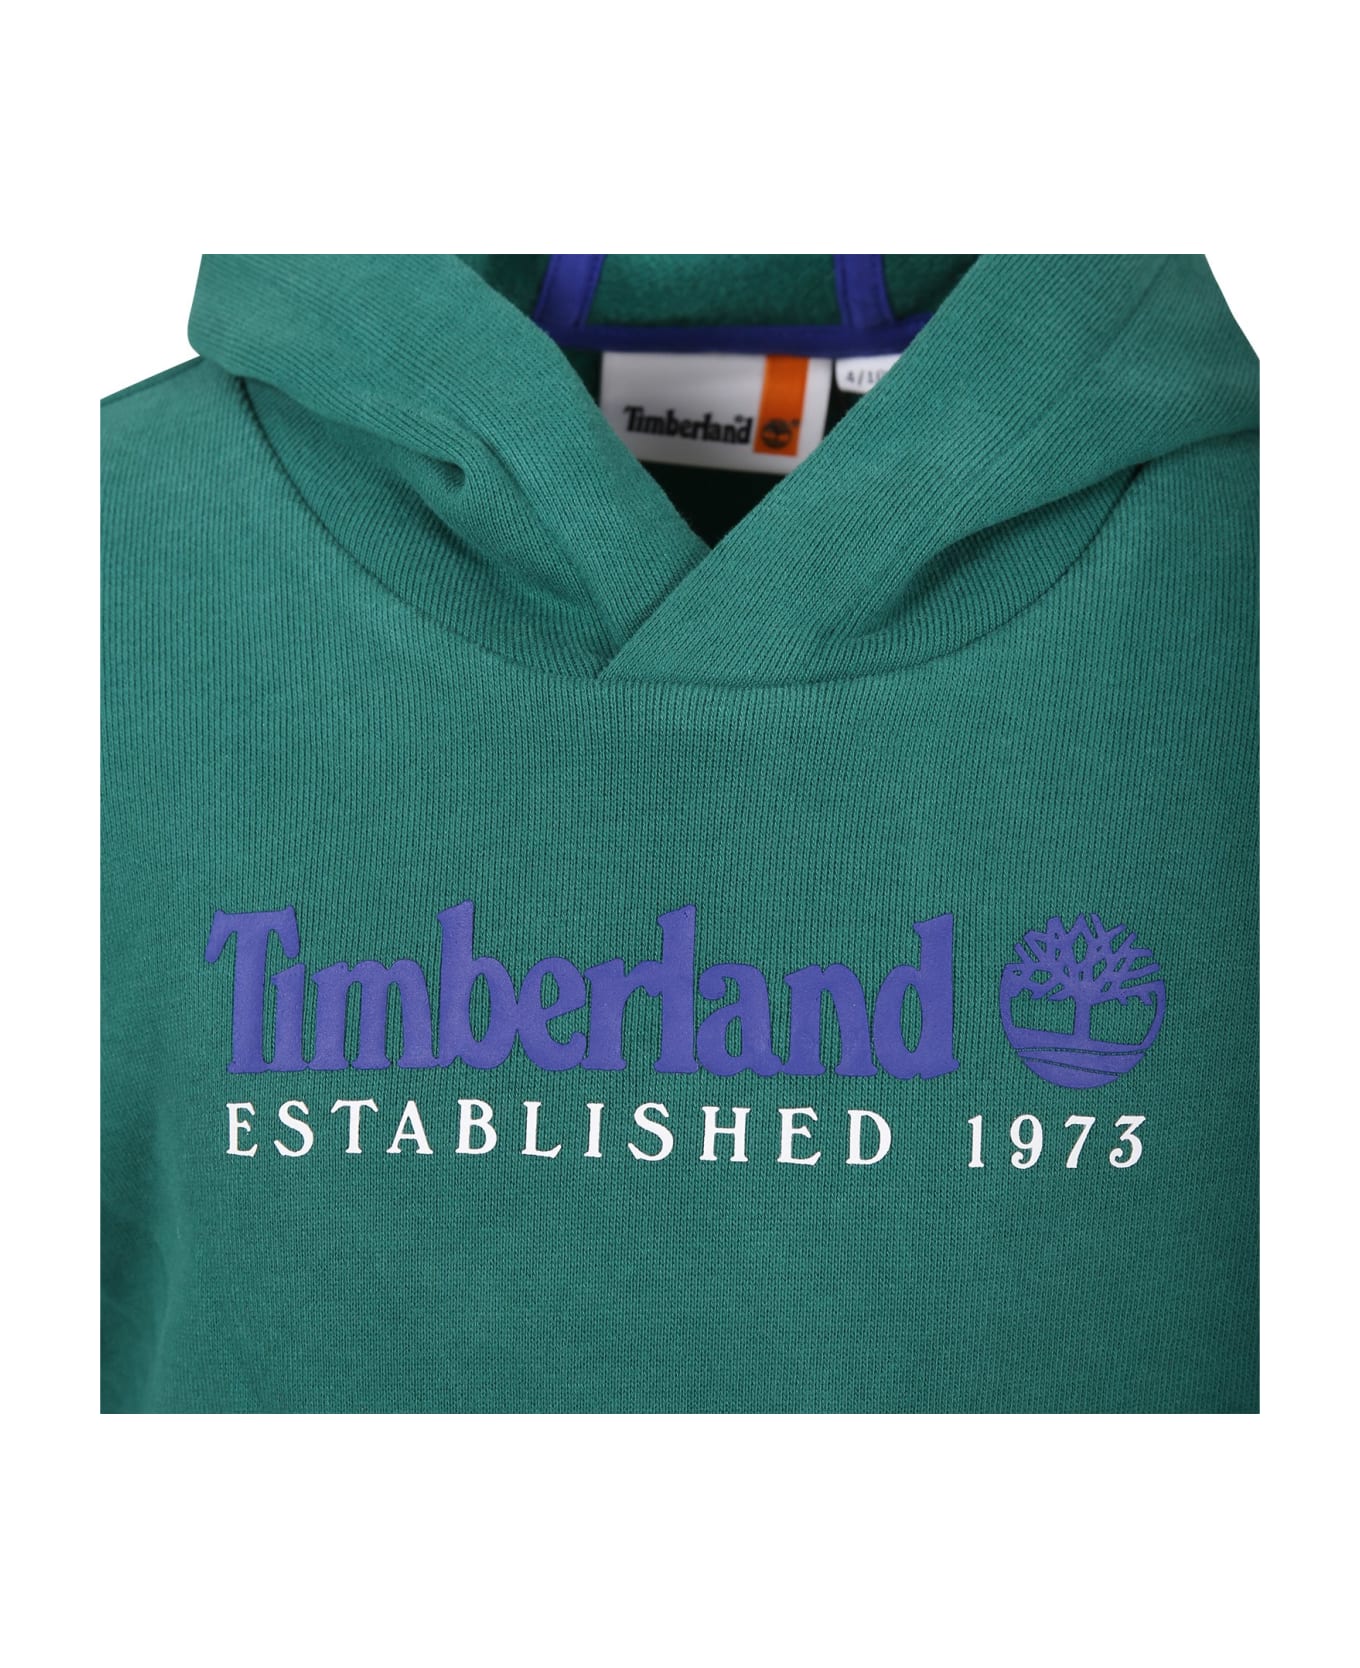 Timberland Green Sweatshirt For Boys With Logo - Green ニットウェア＆スウェットシャツ